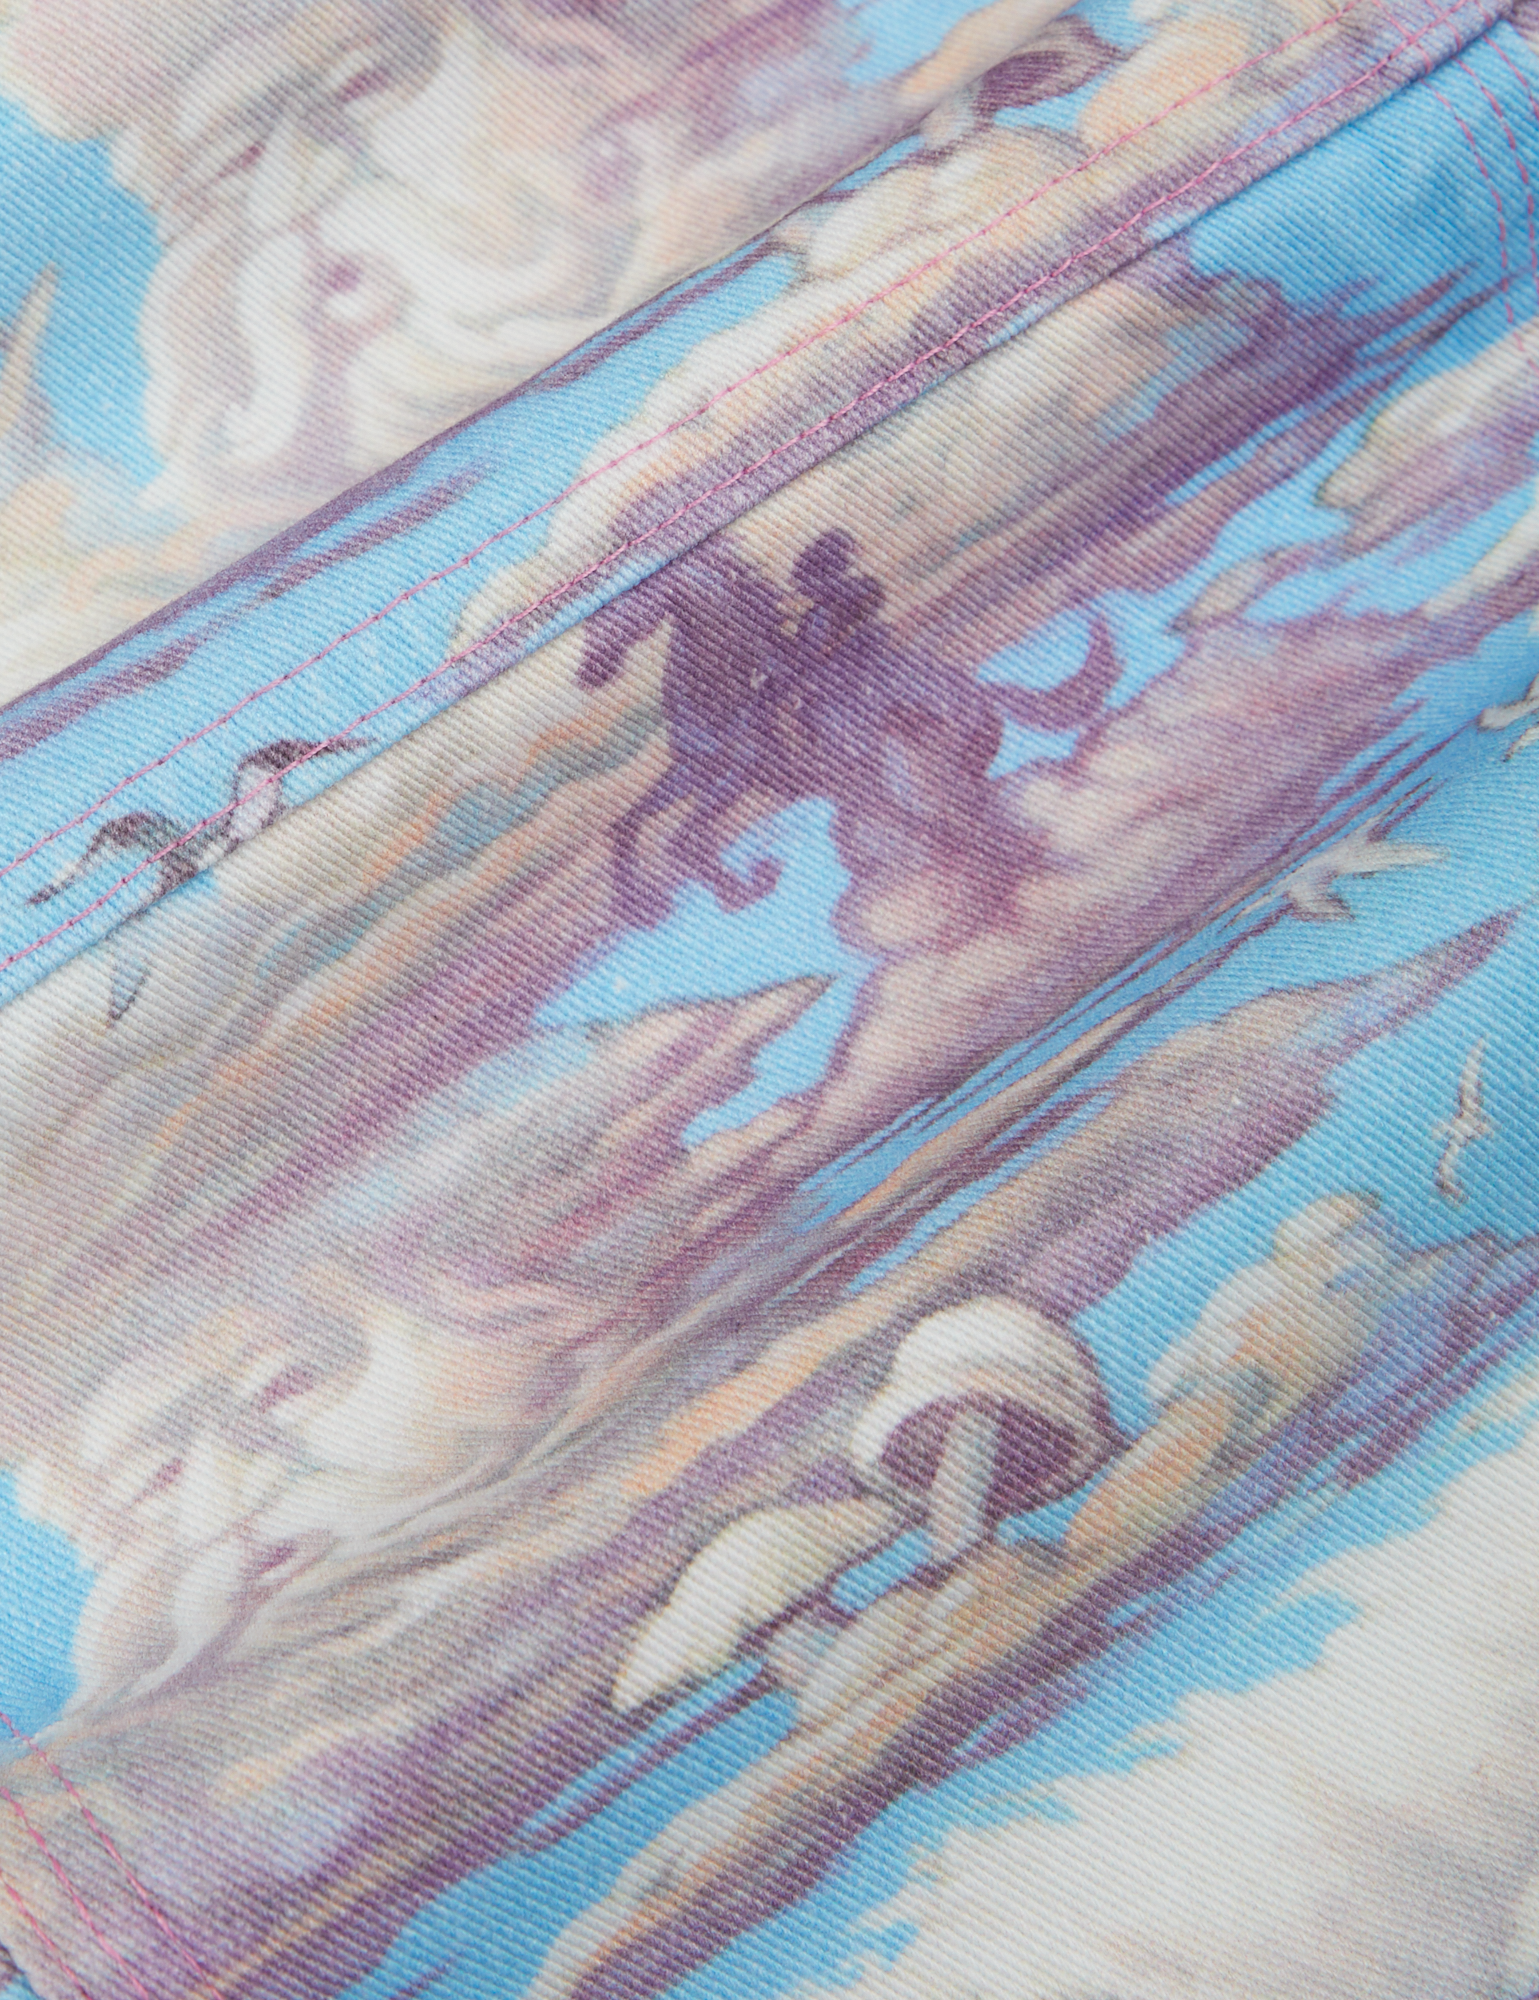 Cloud Kingdom Carpenter Pants fabric detail close up.